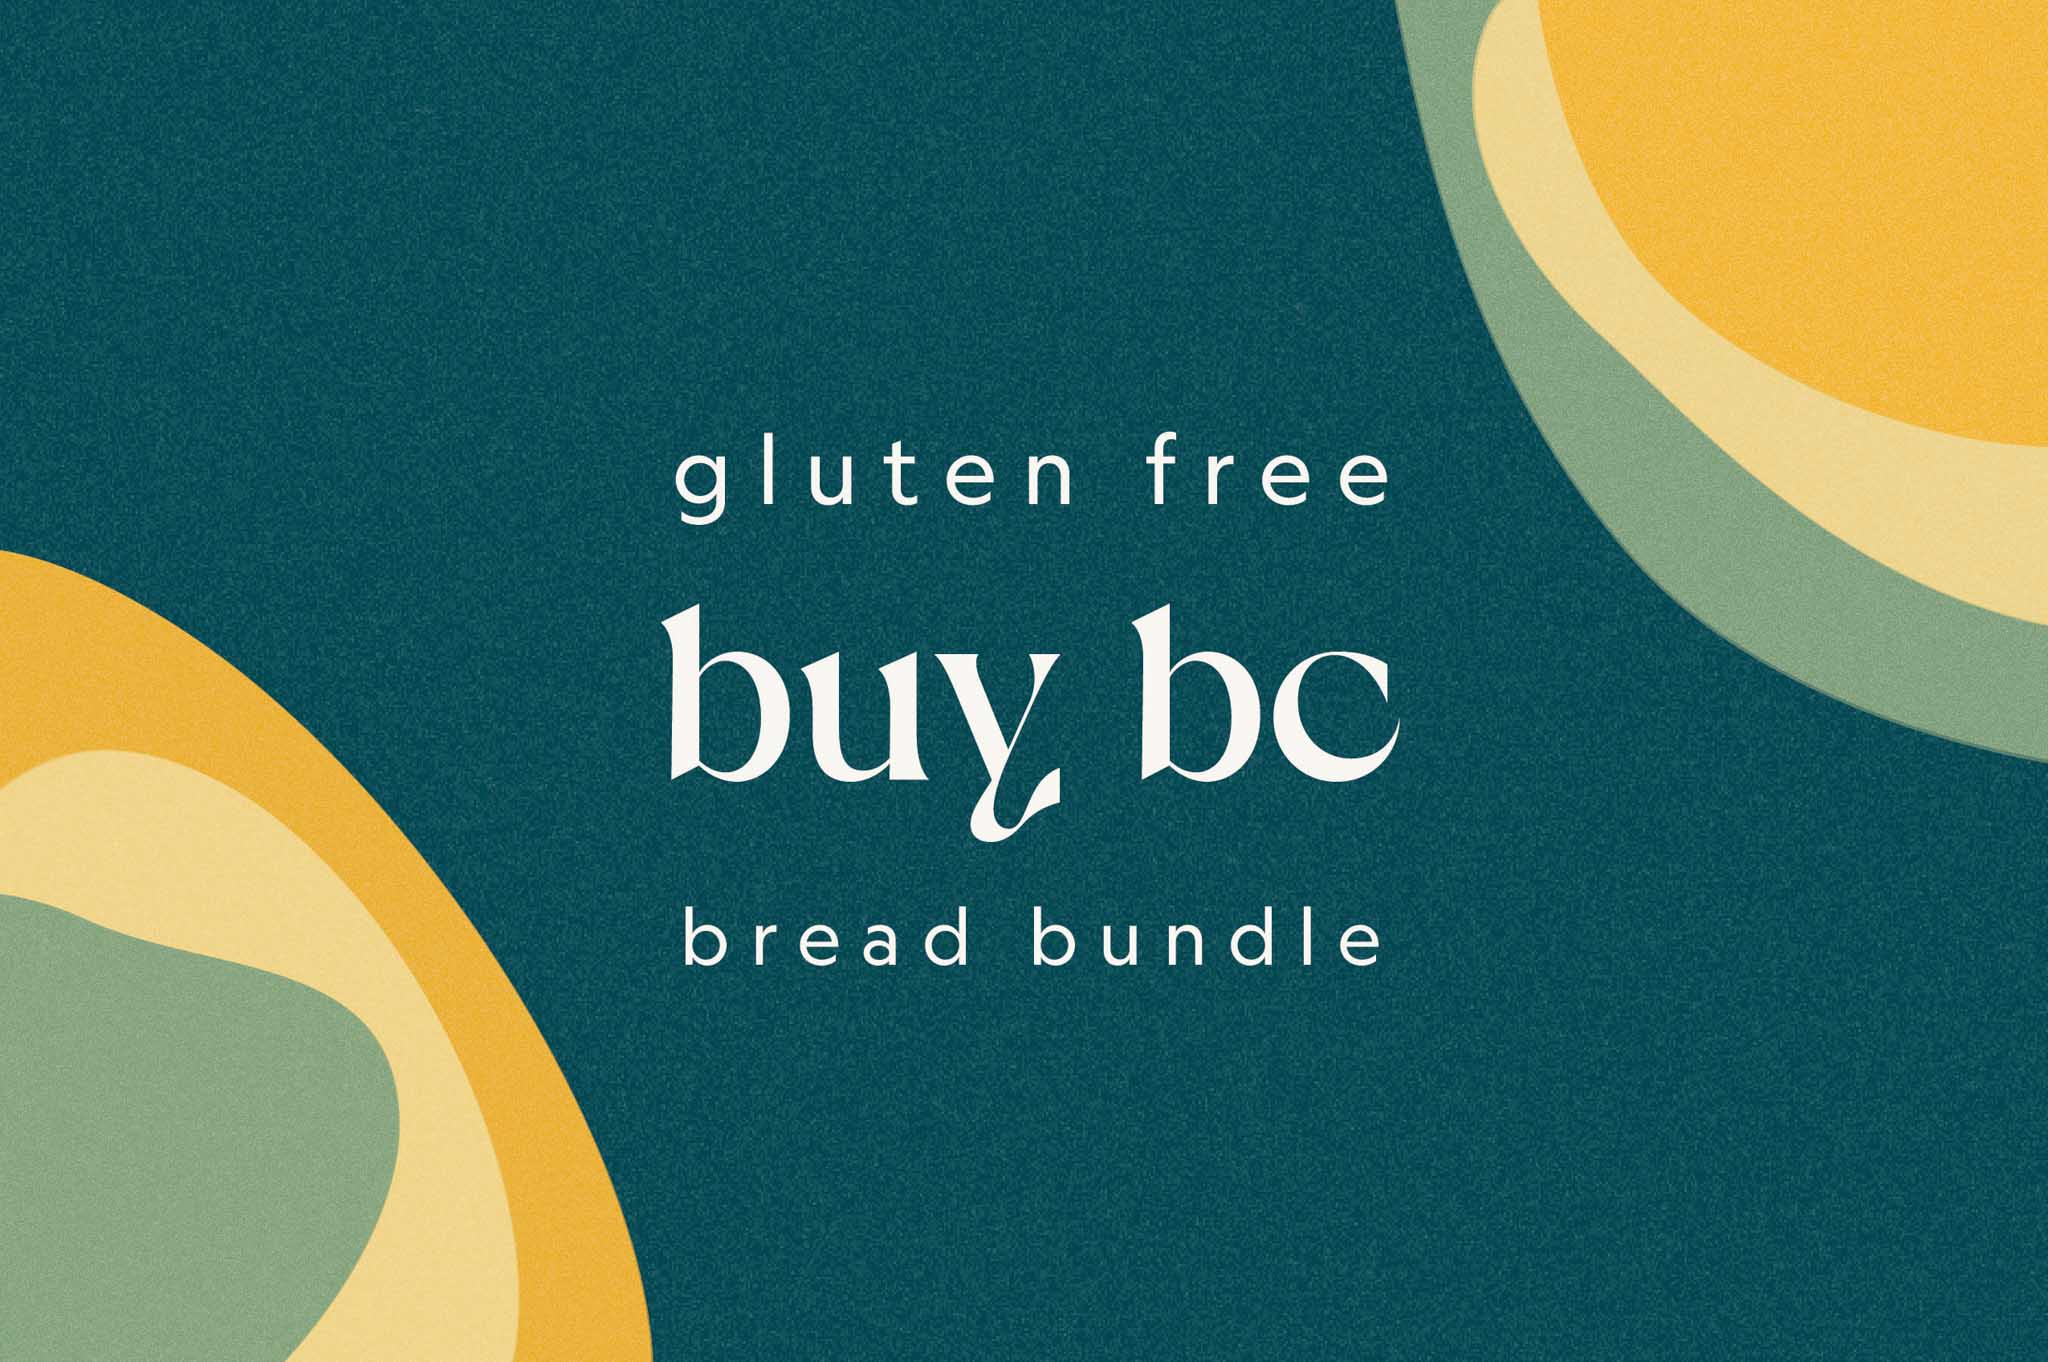 gluten free buy bc bread bundle 